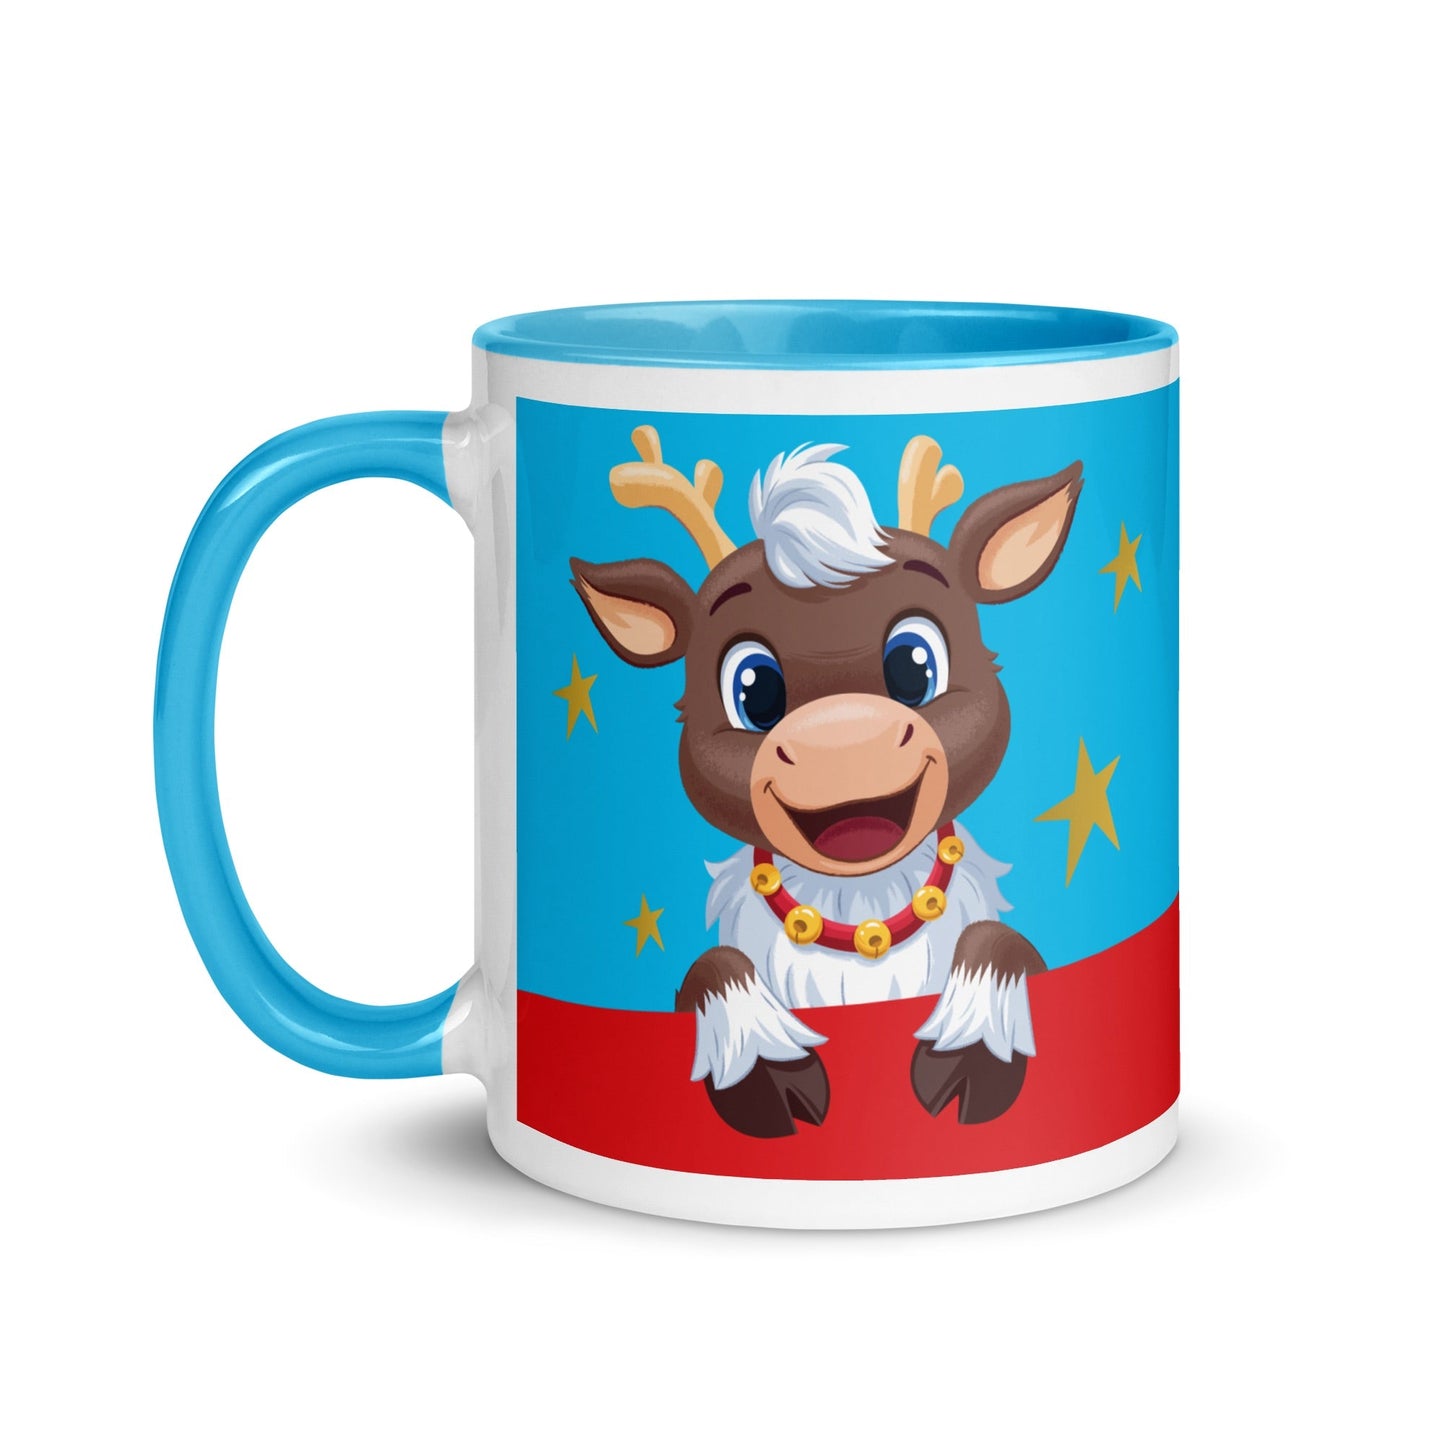 Reindeer in Here Blizz the Season Mug - Paramount Shop